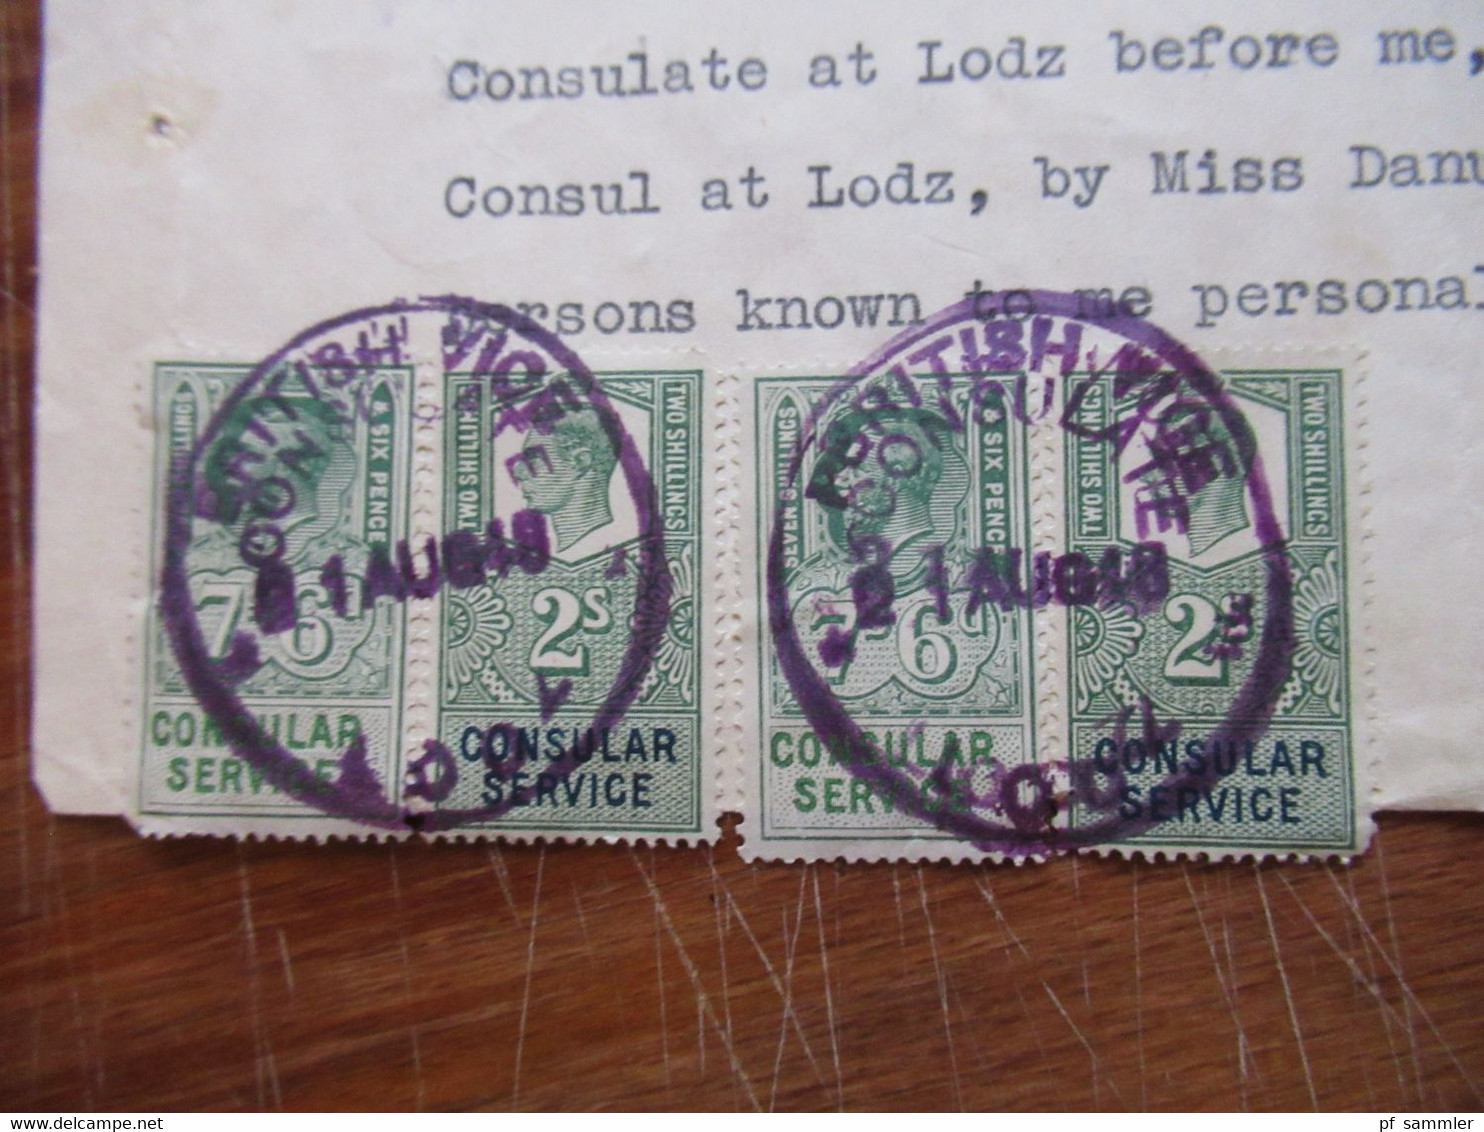 1948 Dokument Mit Fiskalmarken / Revenues Consular Service British Vice Consulate Lodz Erbausschlagung - Covers & Documents